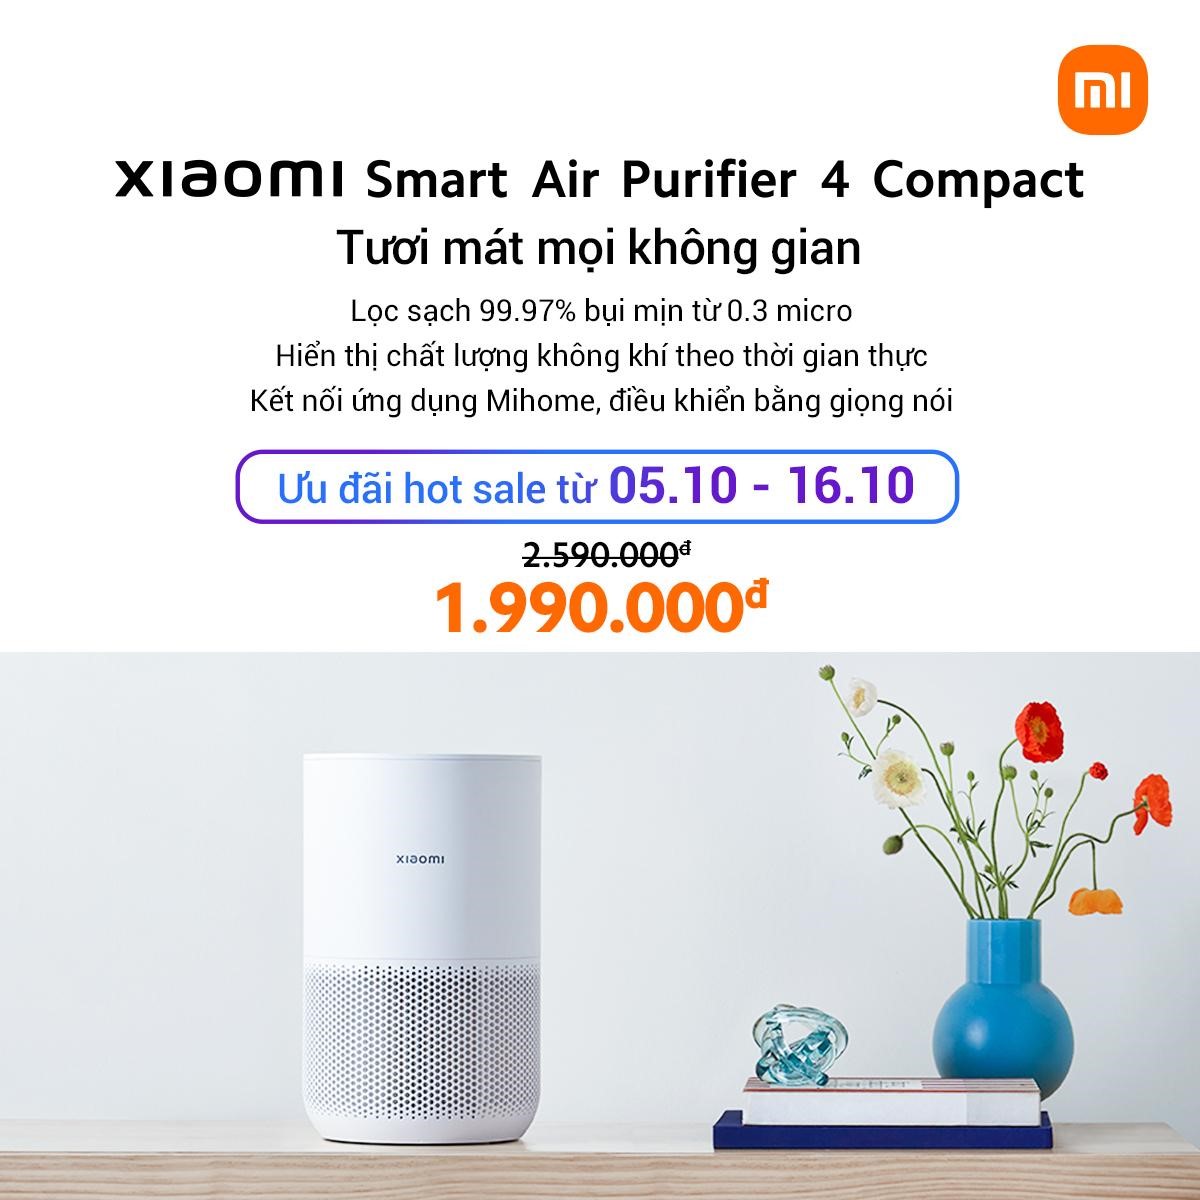 Xiaomi-Smart-Air-Purfier-4-Compact-uu-dai.jpg